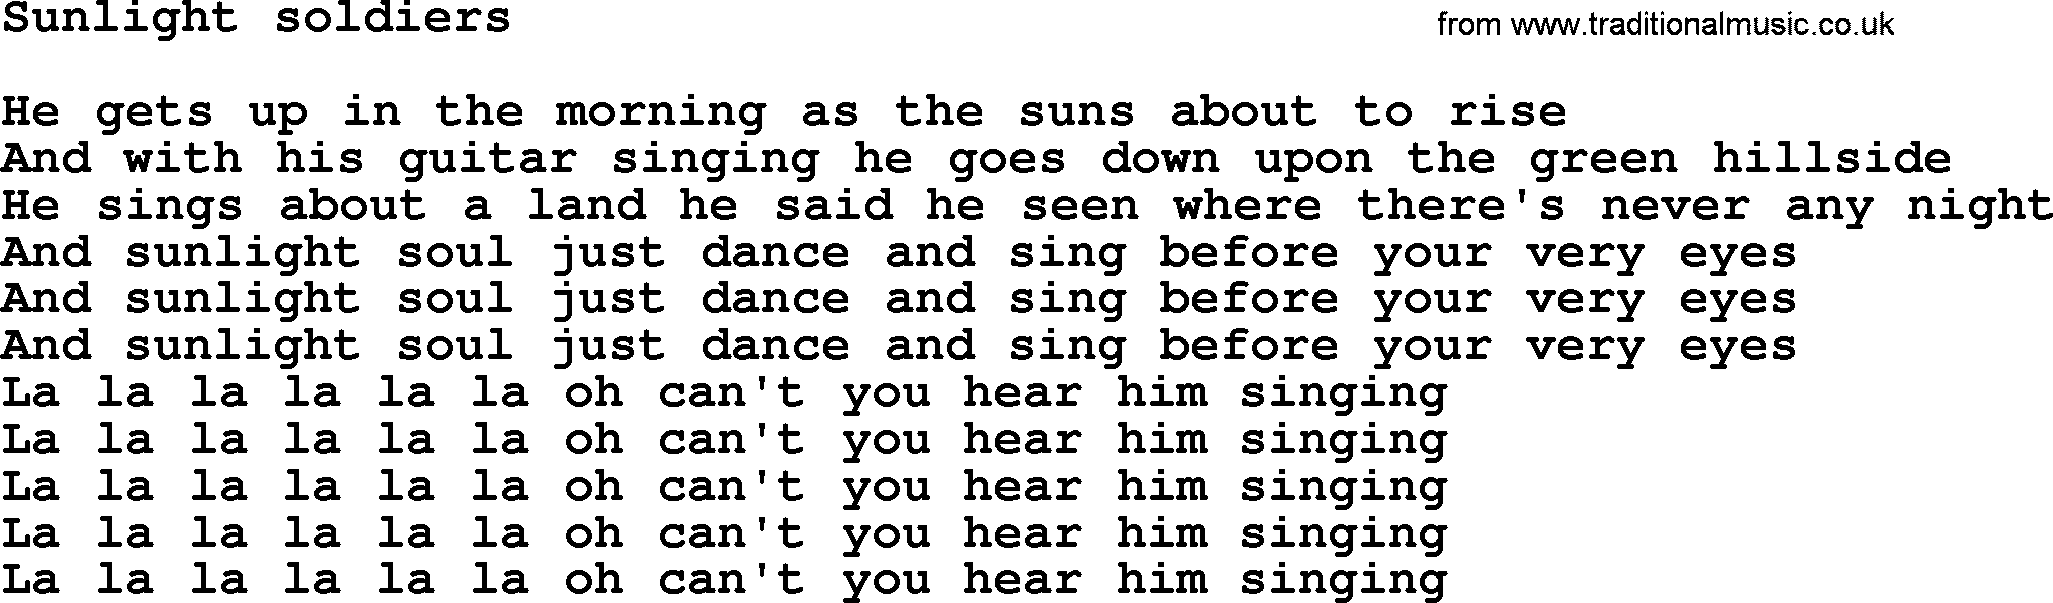 Bruce Springsteen song: Sunlight Soldiers lyrics